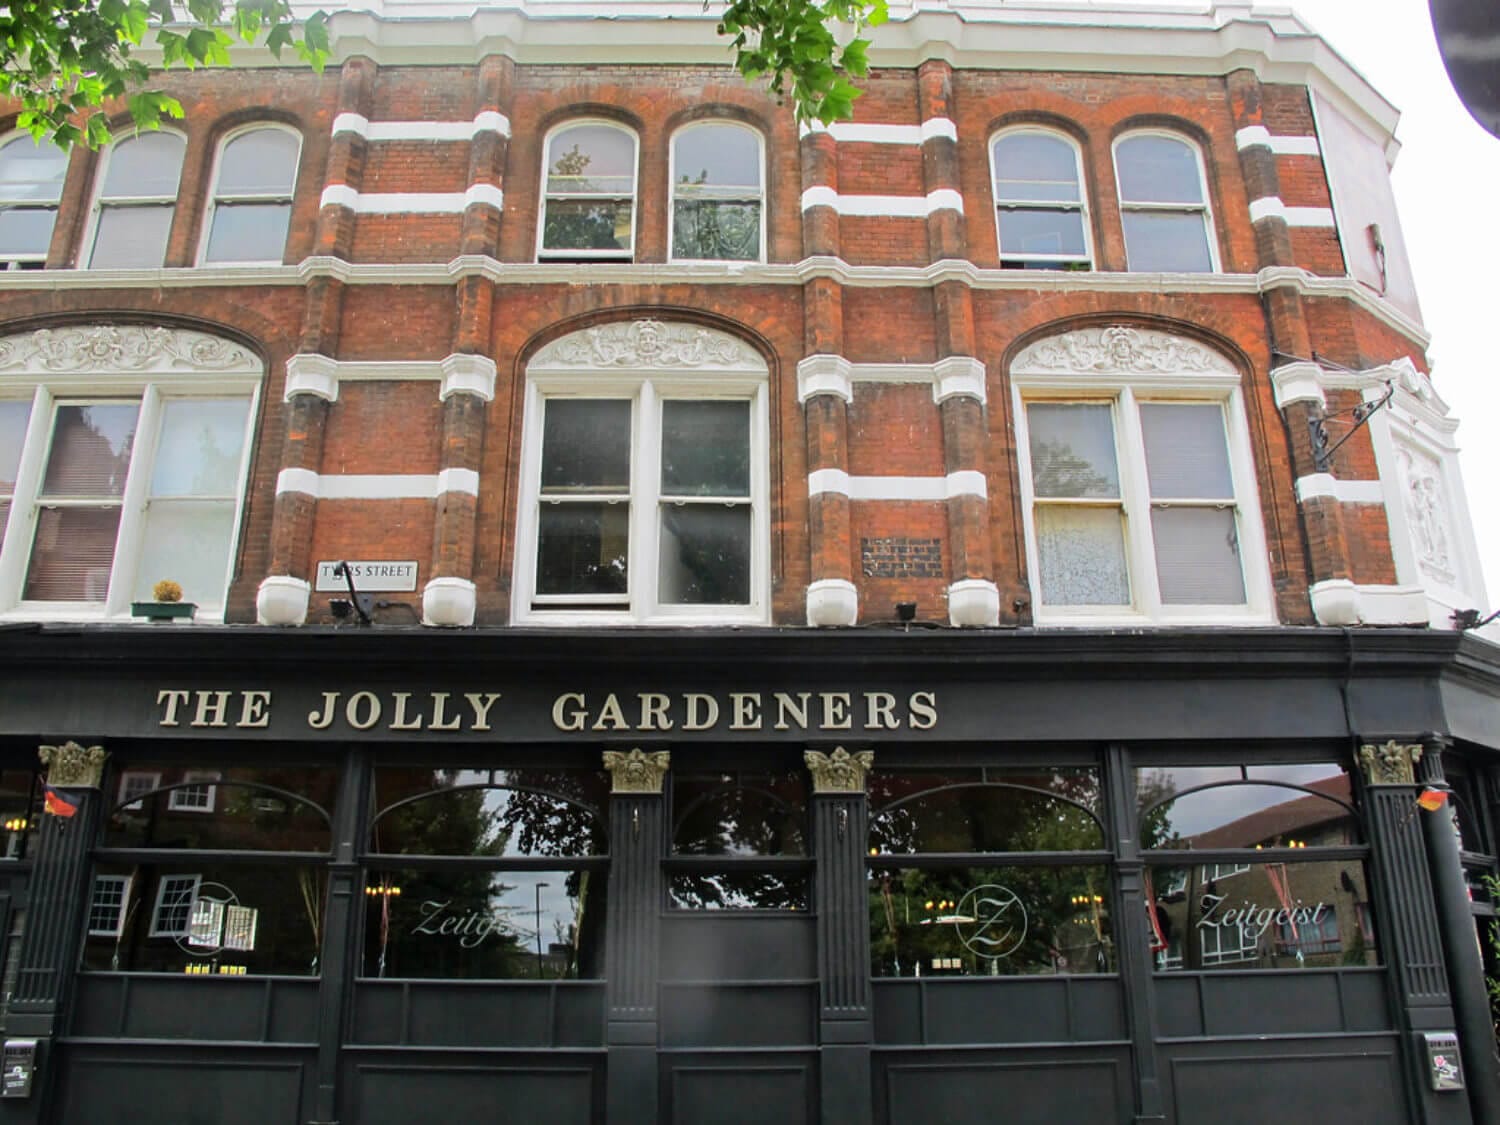 The Jolly Gardeners - Flickr photo by Maggie Jones